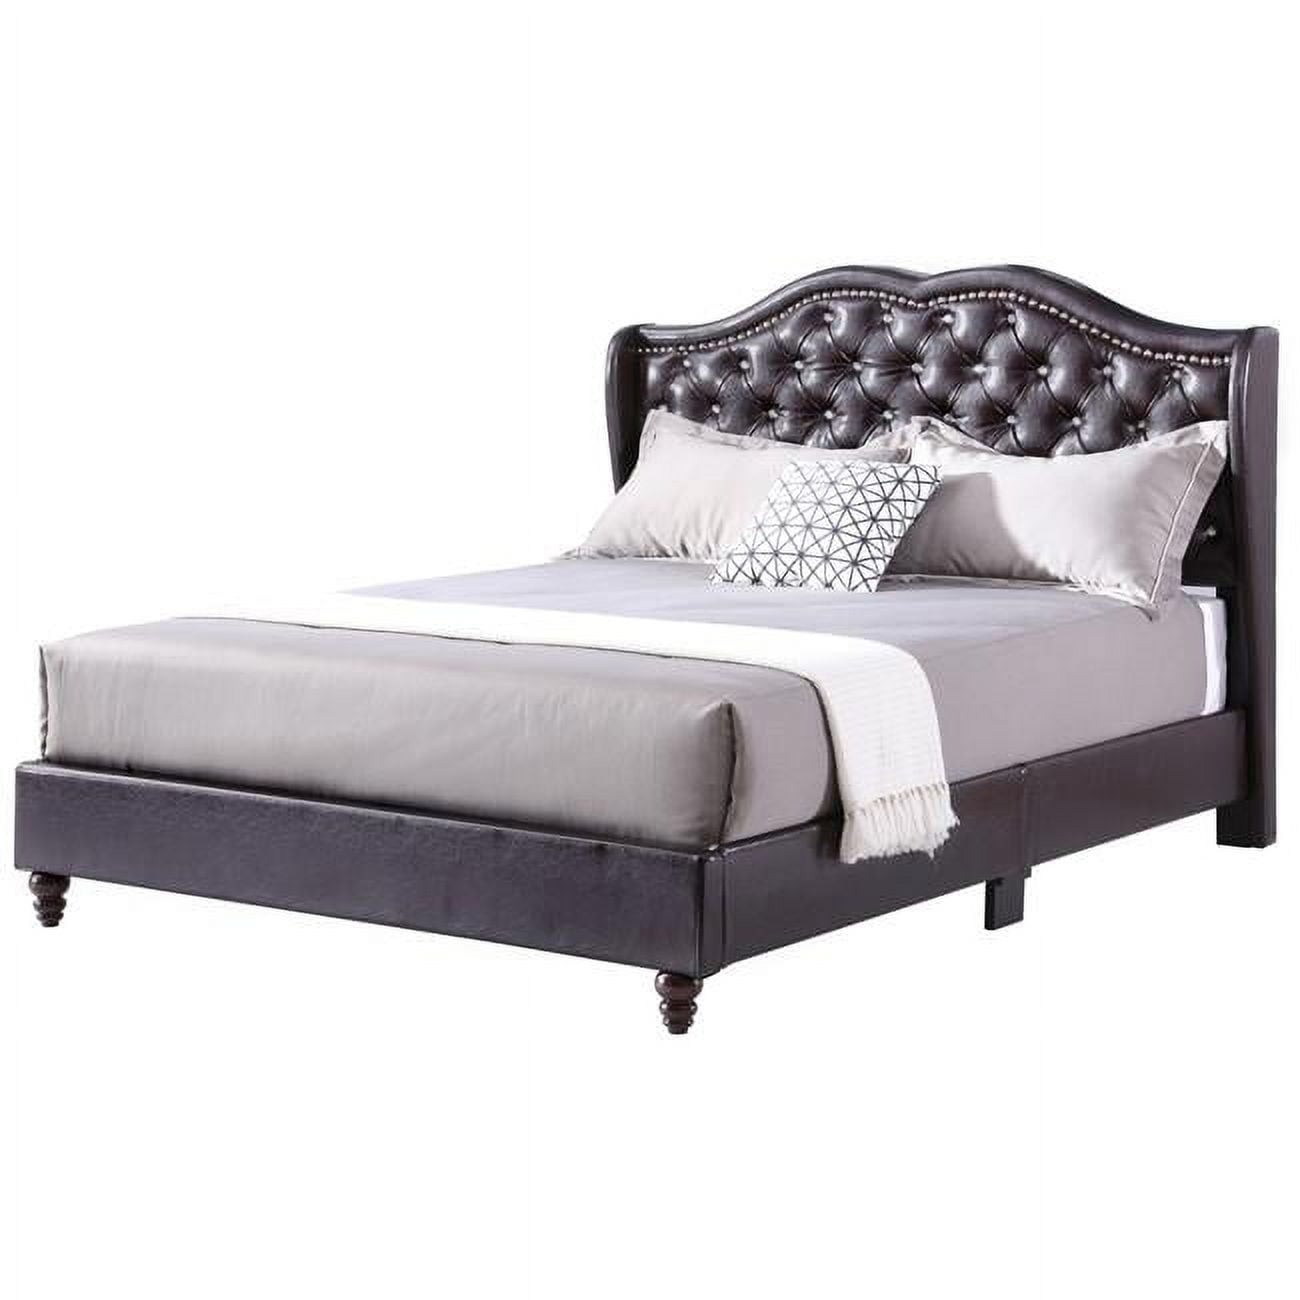 Joy Jeweled Tufted Panel Bed, Dark Brown - King Size -  KD Marco de la cama, KD2212218